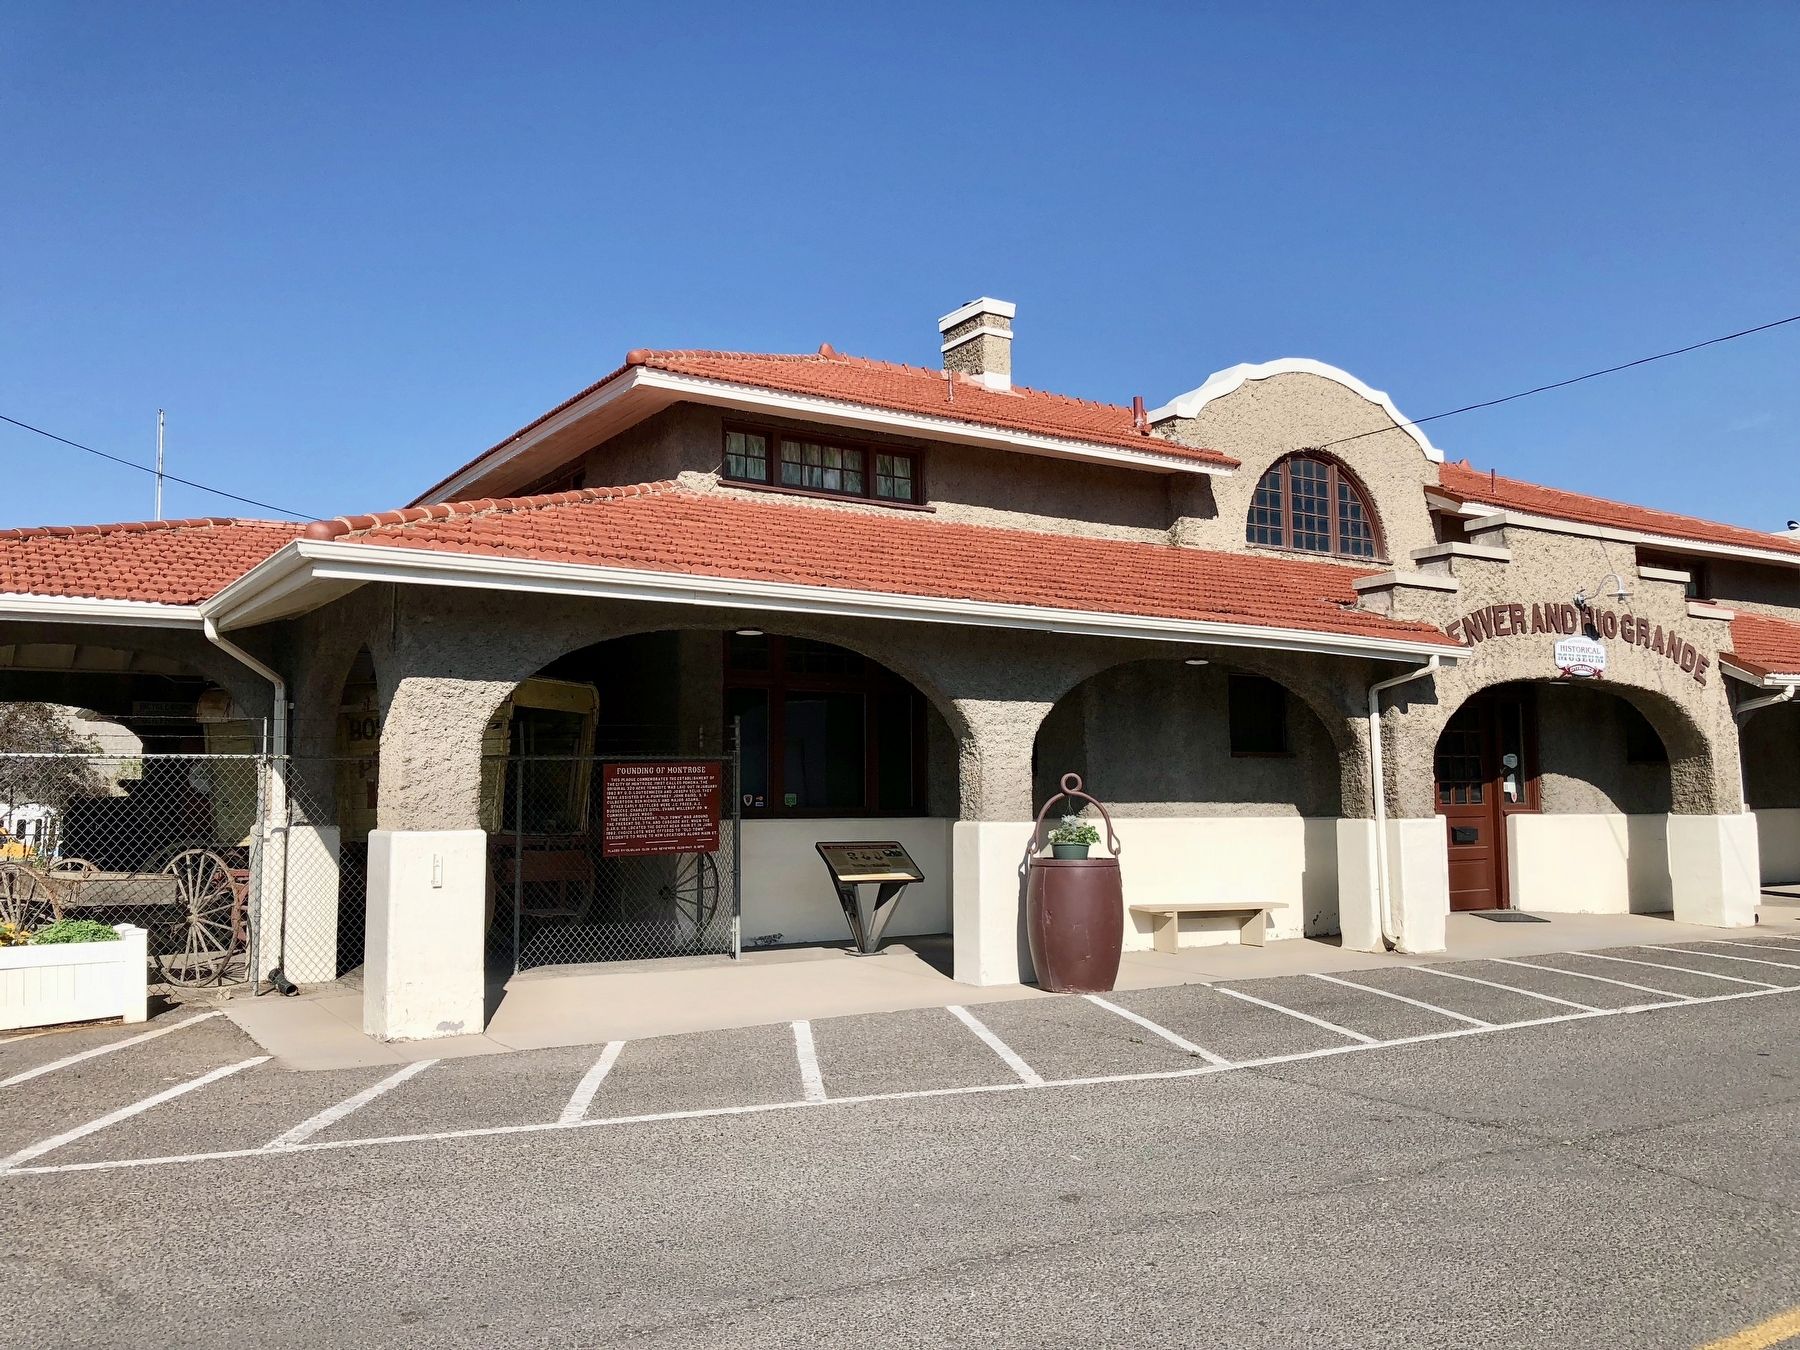 Founding of Montrose Marker at the former Denver & Rio Grande train depot. image. Click for full size.